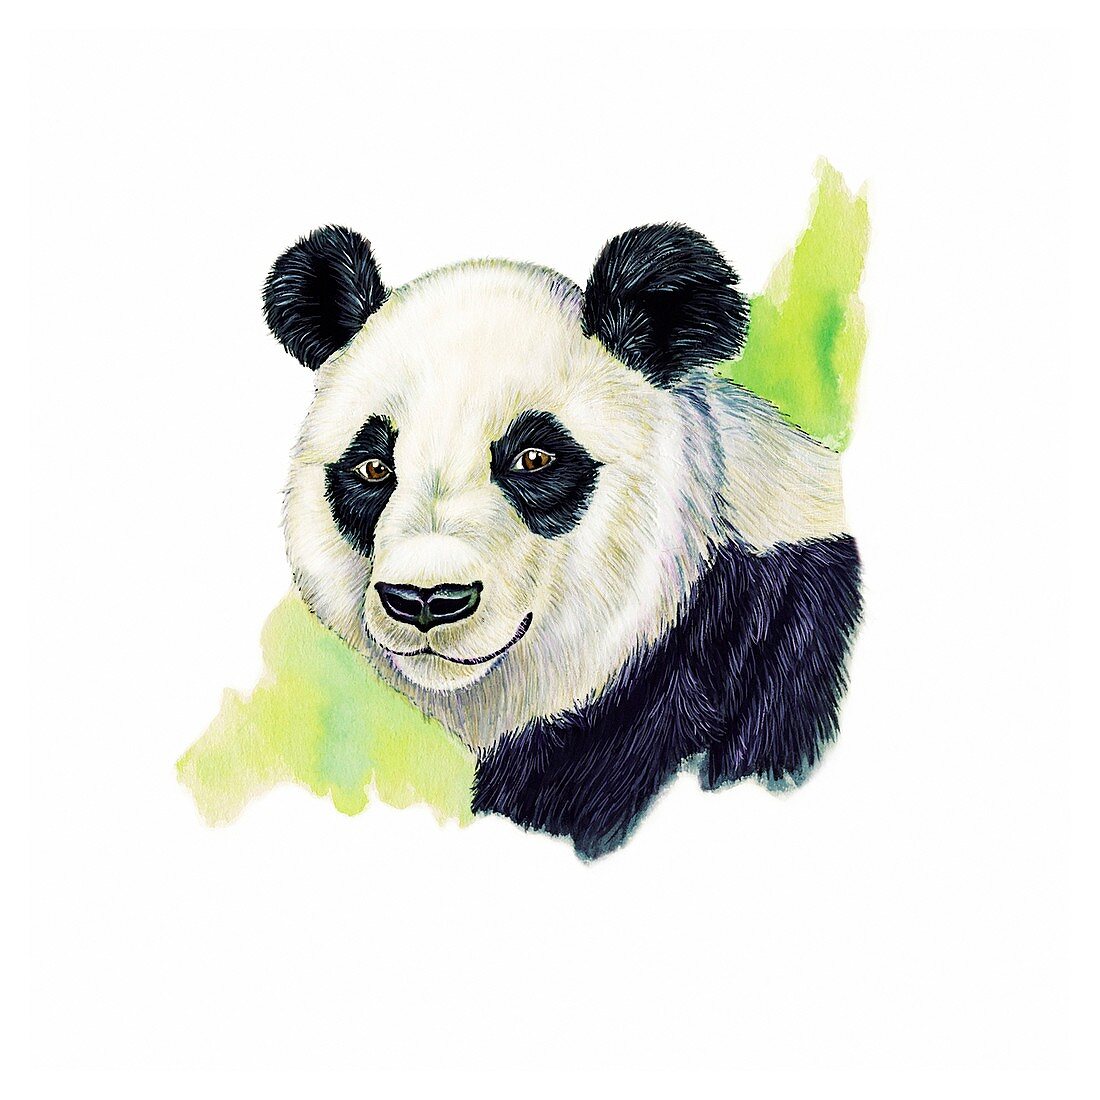 Giant panda, illustration